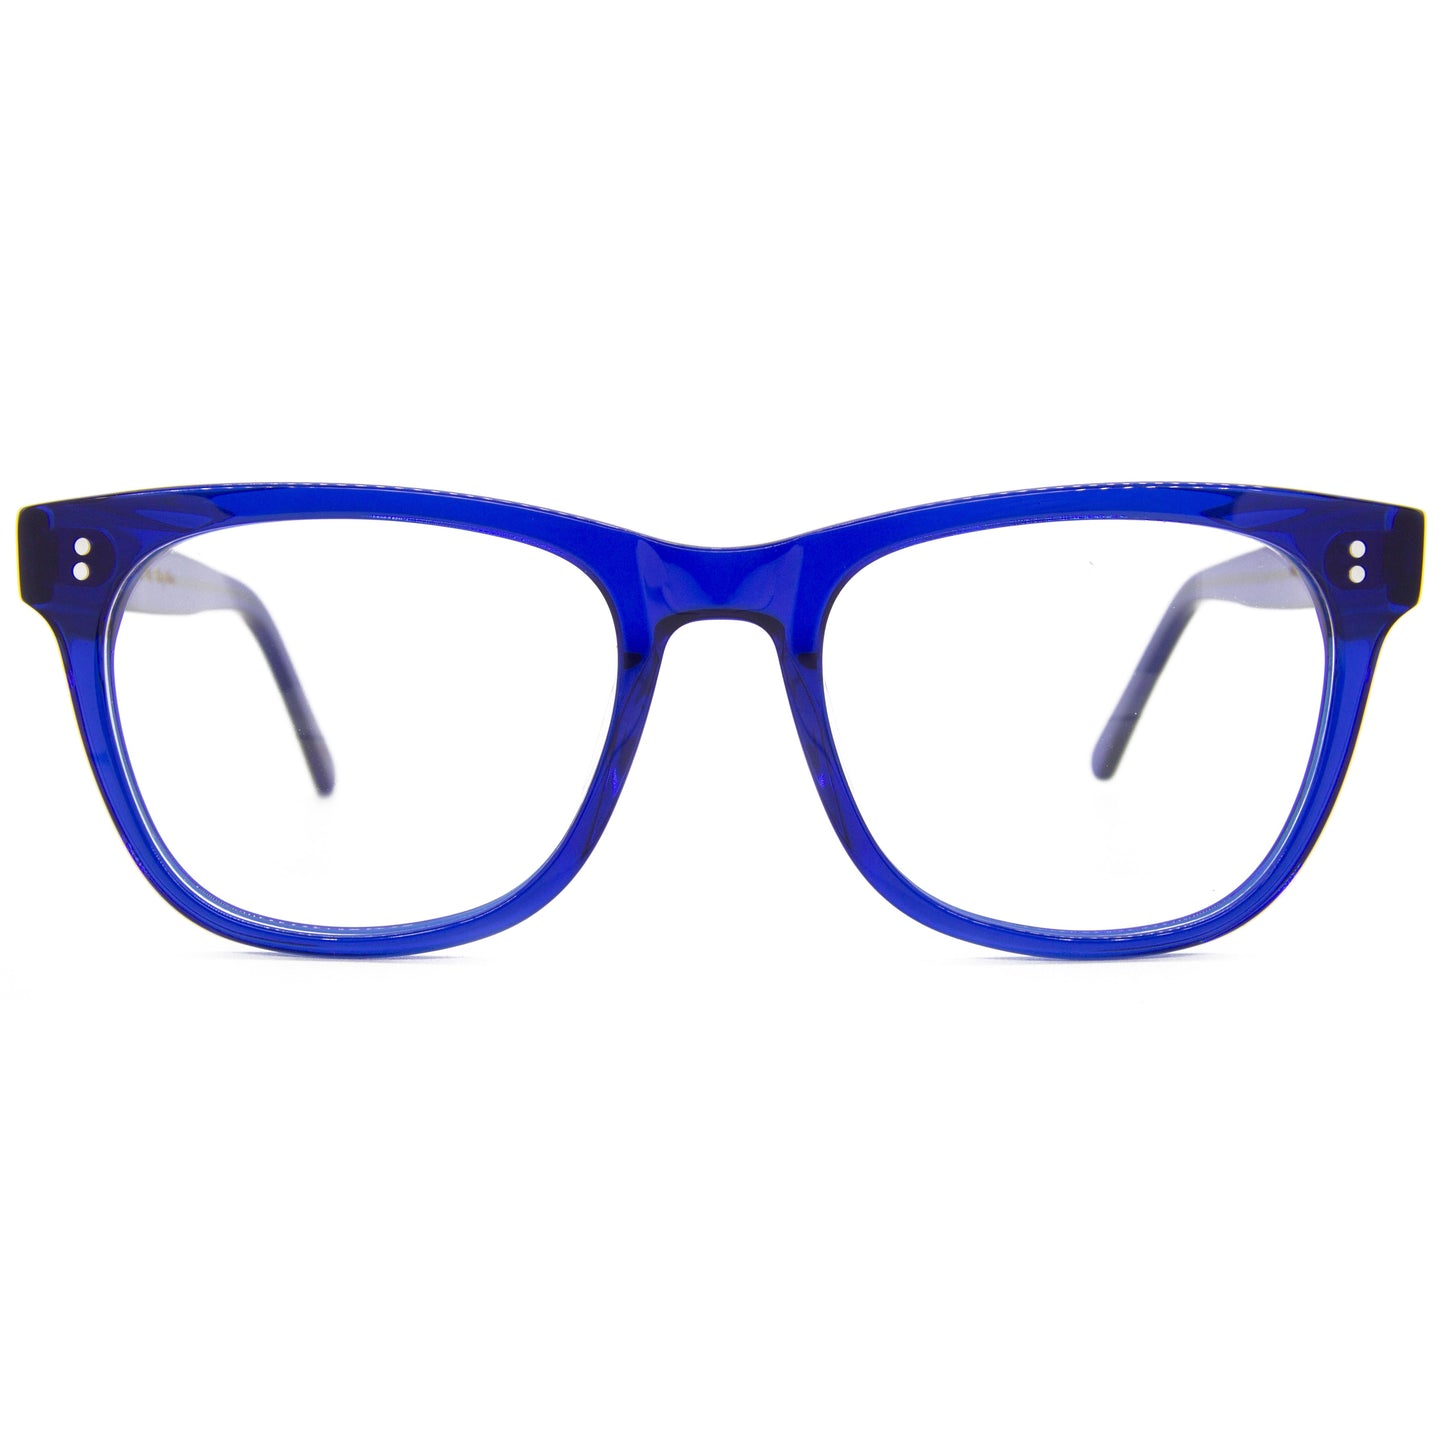 3 brothers - Big Maz - Blue - Prescription Glasses